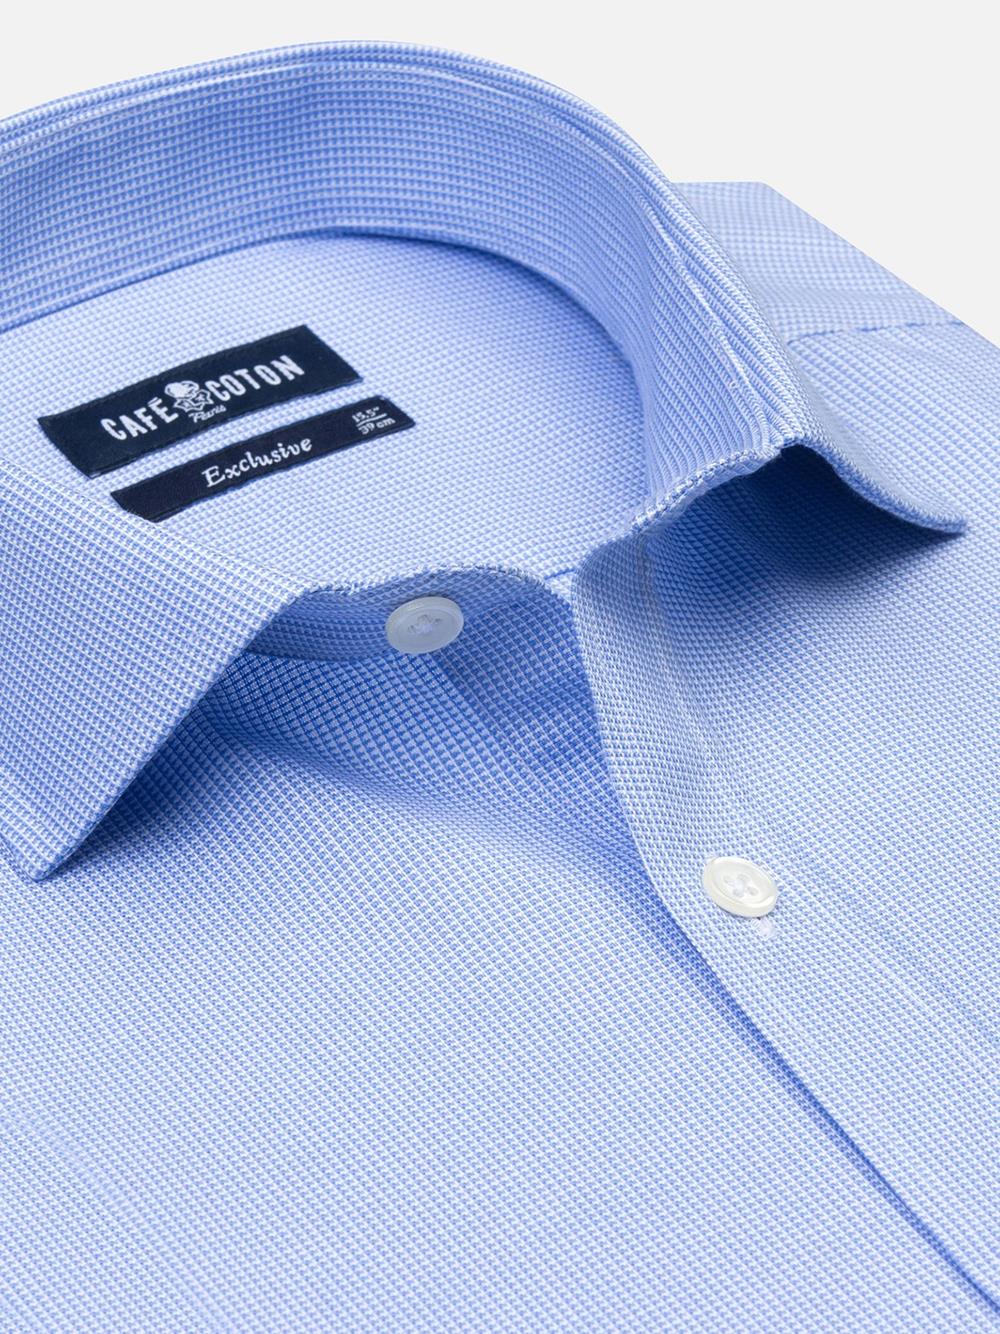 Blue sky printed textured slim fit shirt